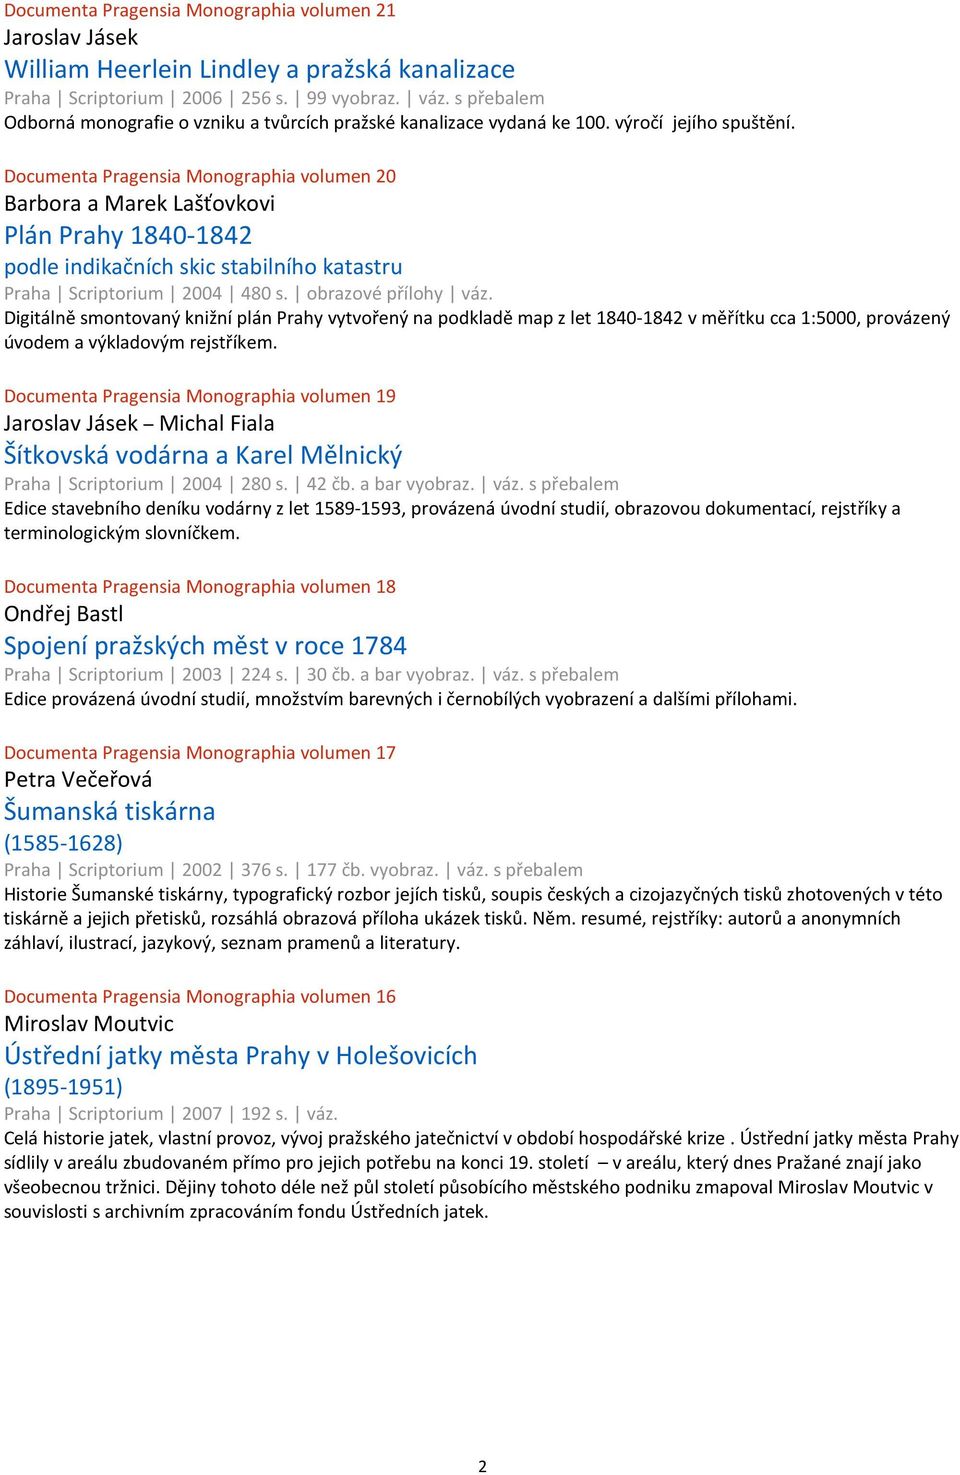 Documenta Pragensia Monographia volumen 20 Barbora a Marek Lašťovkovi Plán Prahy 1840-1842 podle indikačních skic stabilního katastru Praha Scriptorium 2004 480 s. obrazové přílohy váz.